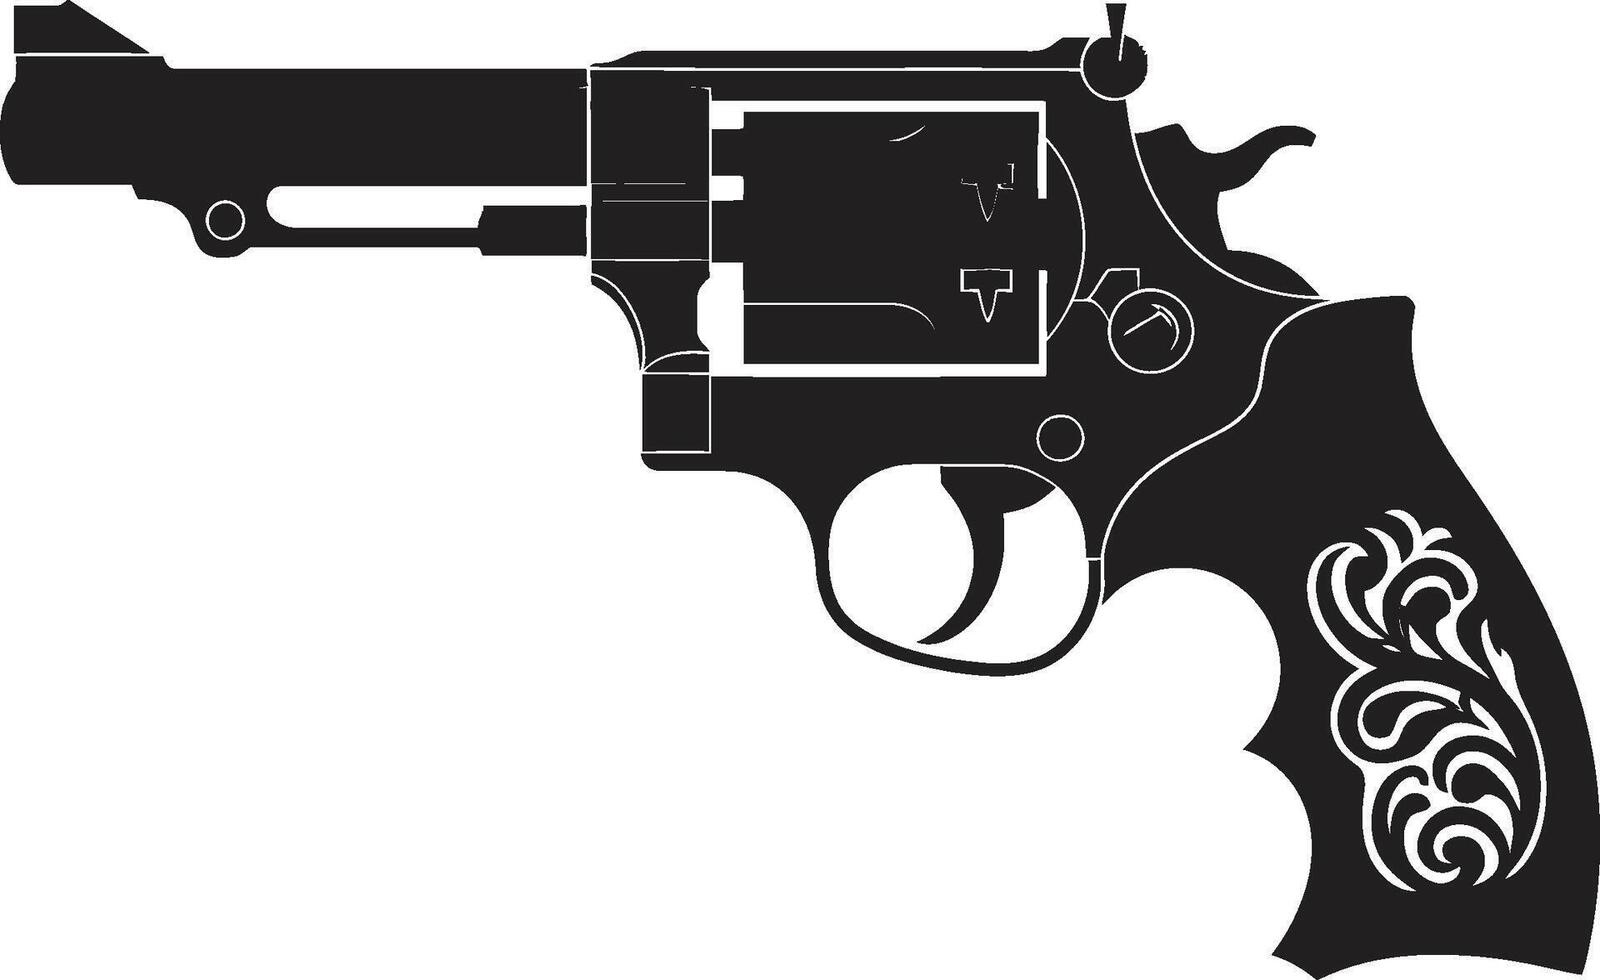 Tactical Trend Crest Trendsetting Revolver Icon in Modern Design Gunmetal Glam Badge Stylish Revolver Vector for Urban Appeal